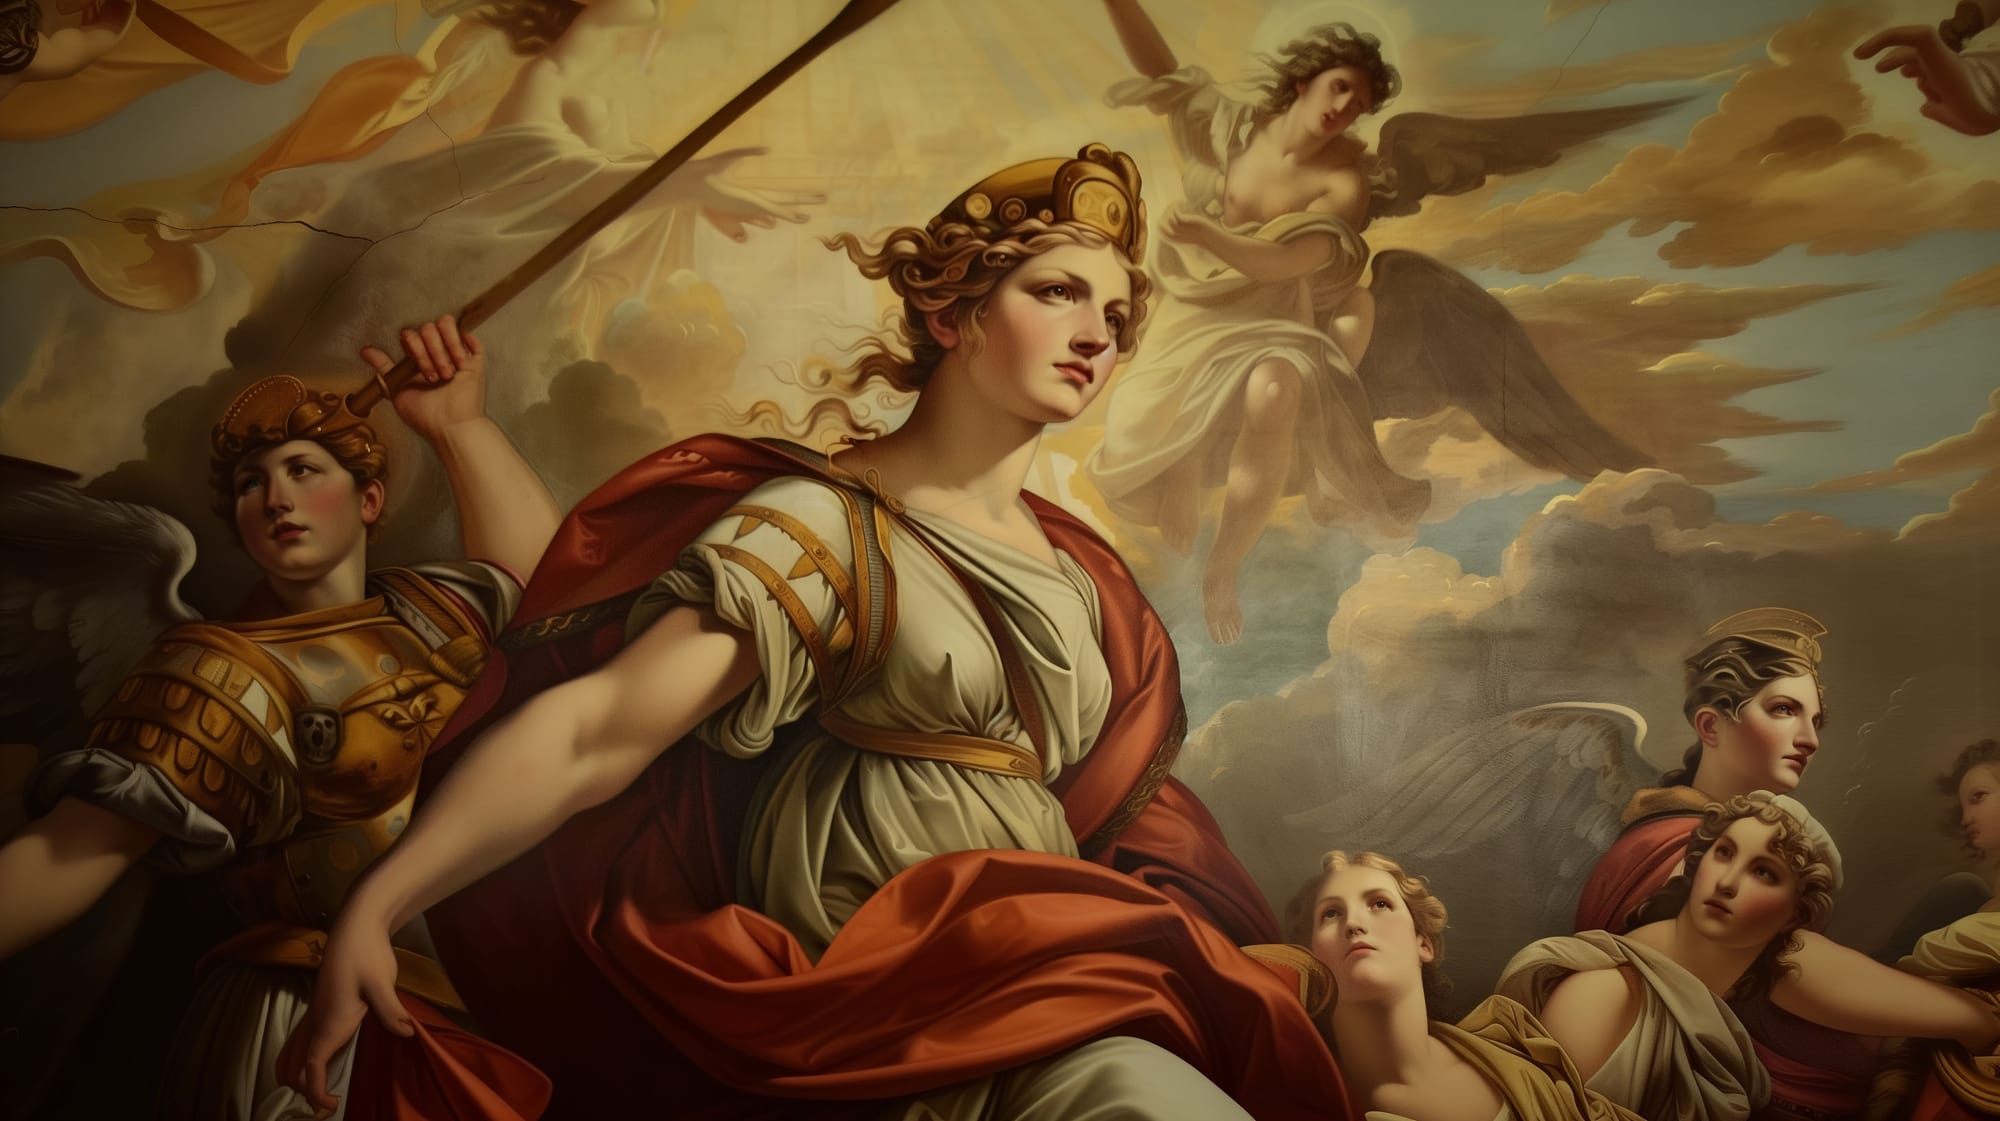 A representation of the Roman Goddess Aurora, in classic Renaissance style.